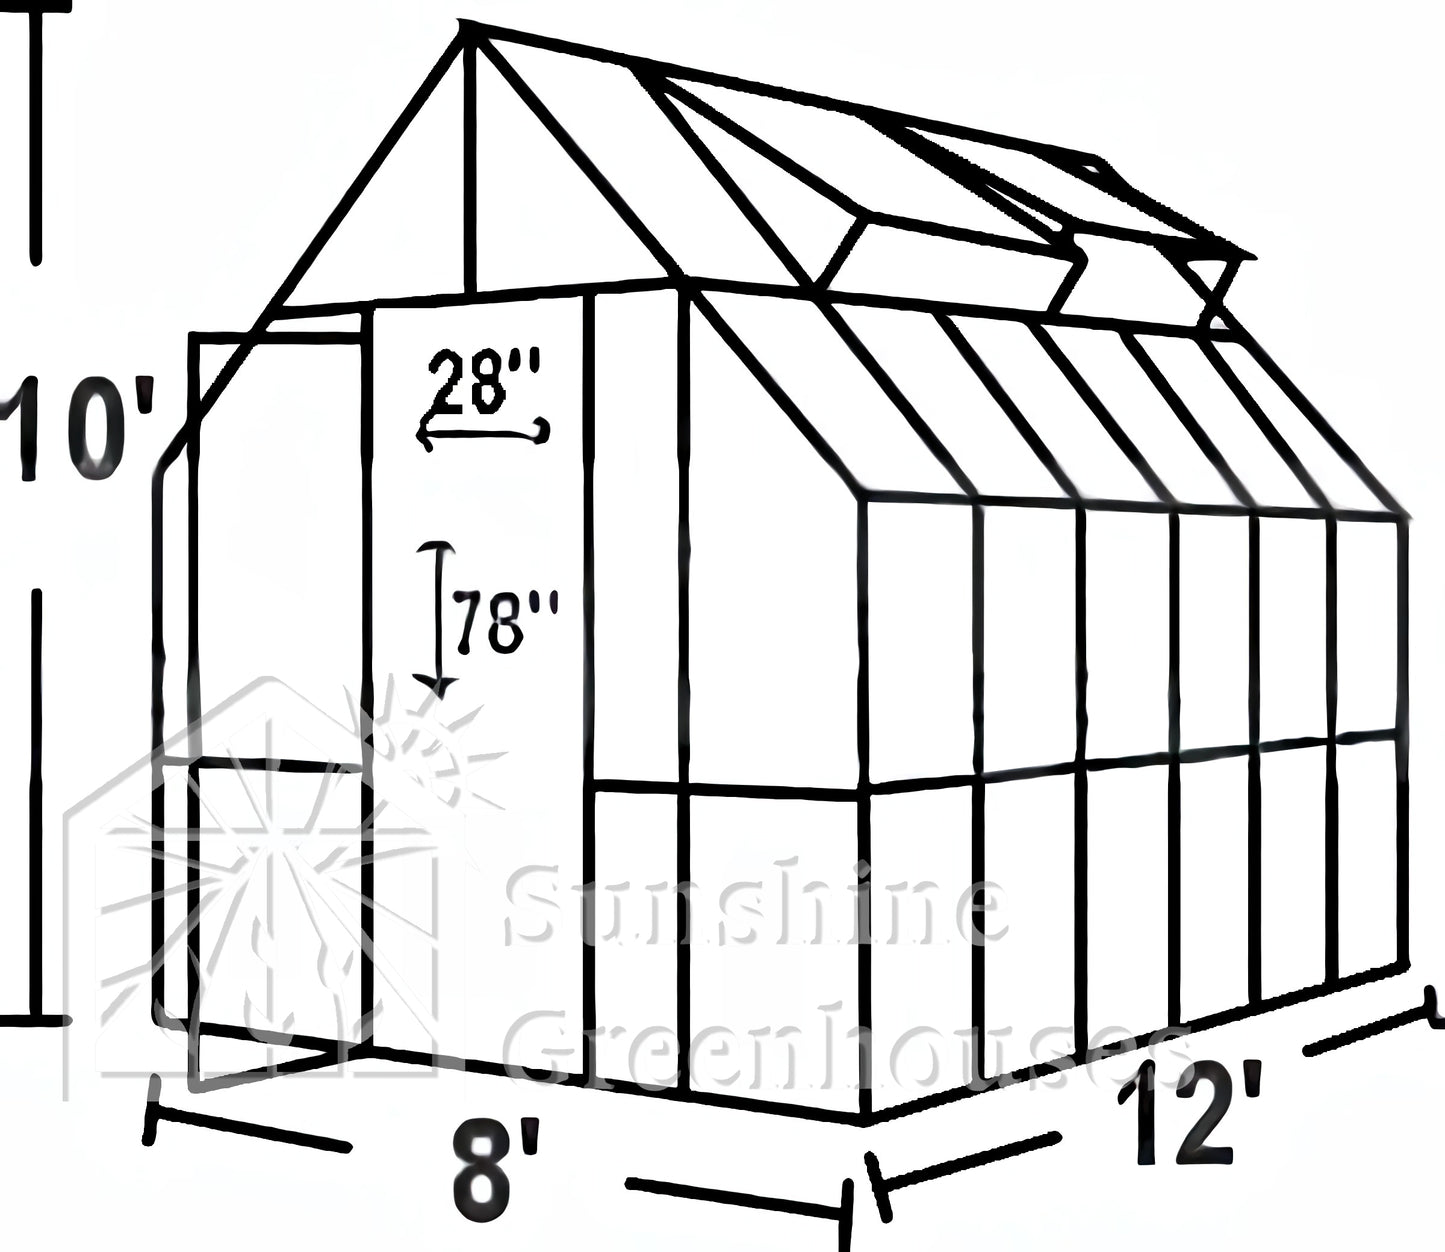 Mt. Rainier 8' x 12' Greenhouse Kit